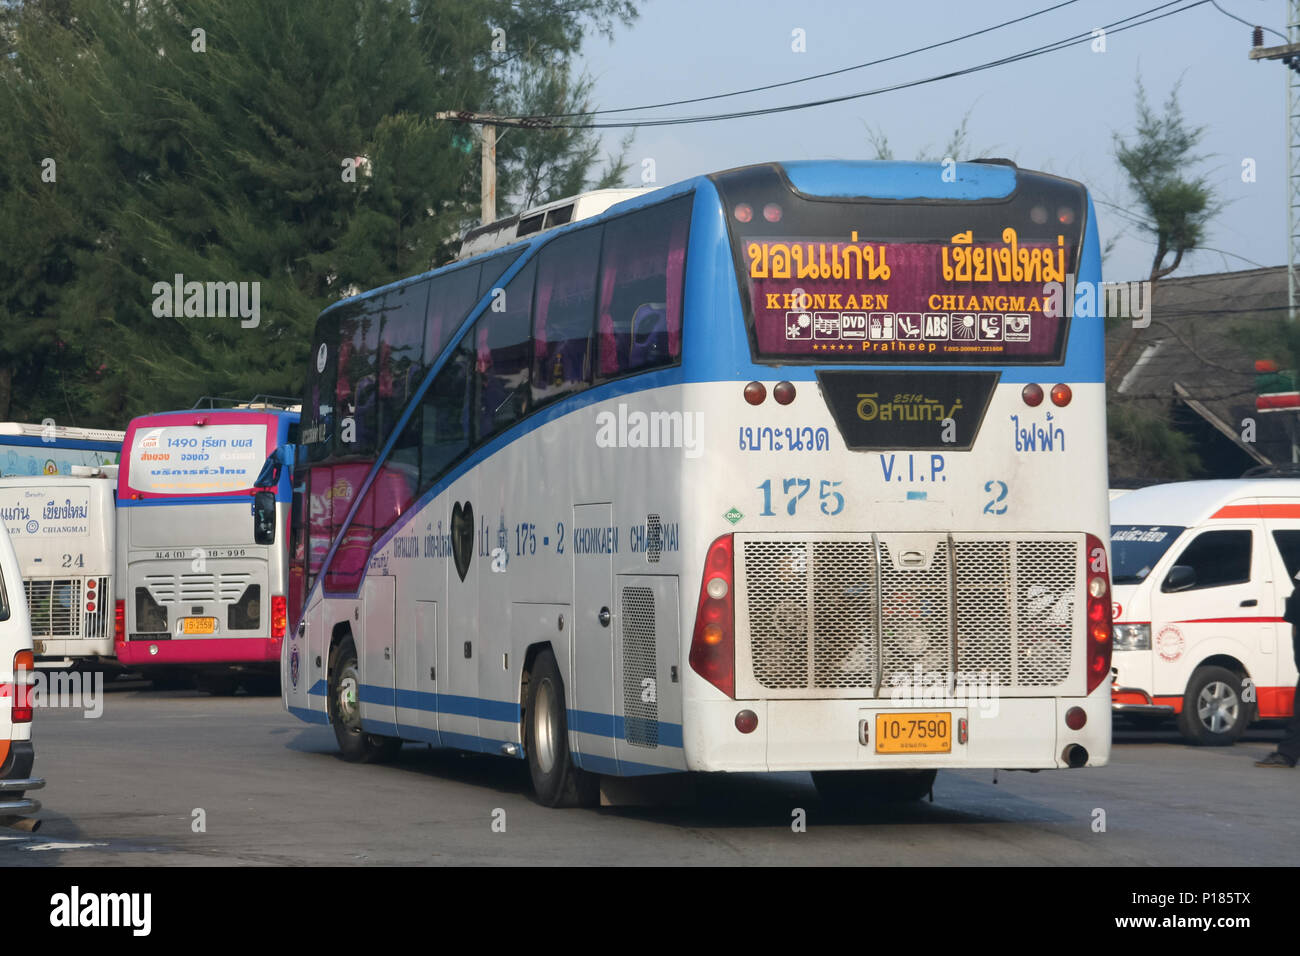 CHIANG MAI, THAILAND - 15. OKTOBER 2011: esarn Tour Company Bus Route Khonkaen und Chiangmai. Foto bei Chiangmai Busbahnhof, Thailand. Stockfoto